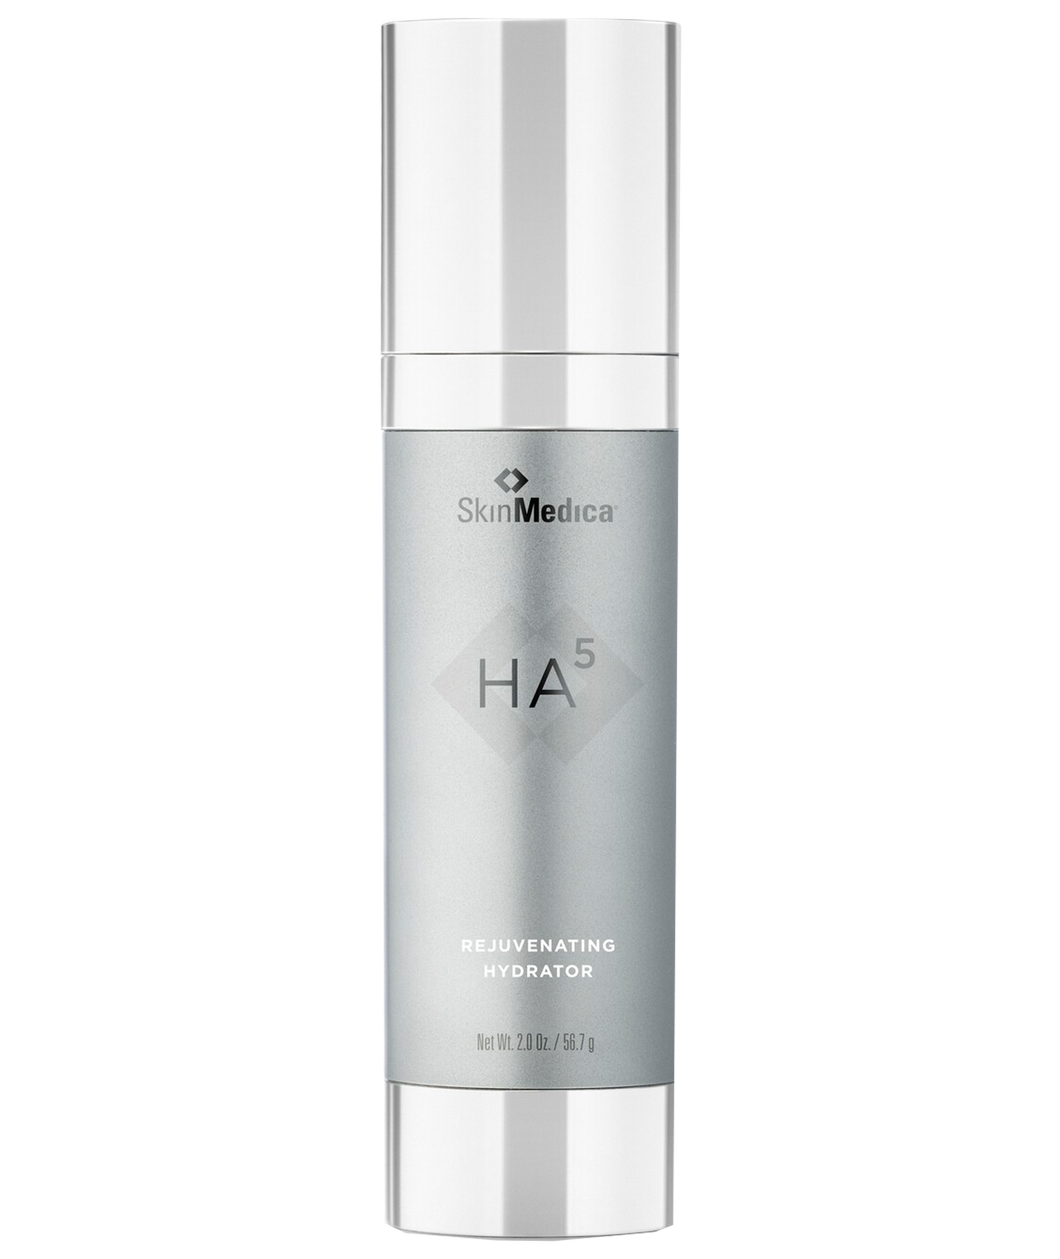 HA5 Rejuvenating Hydrator